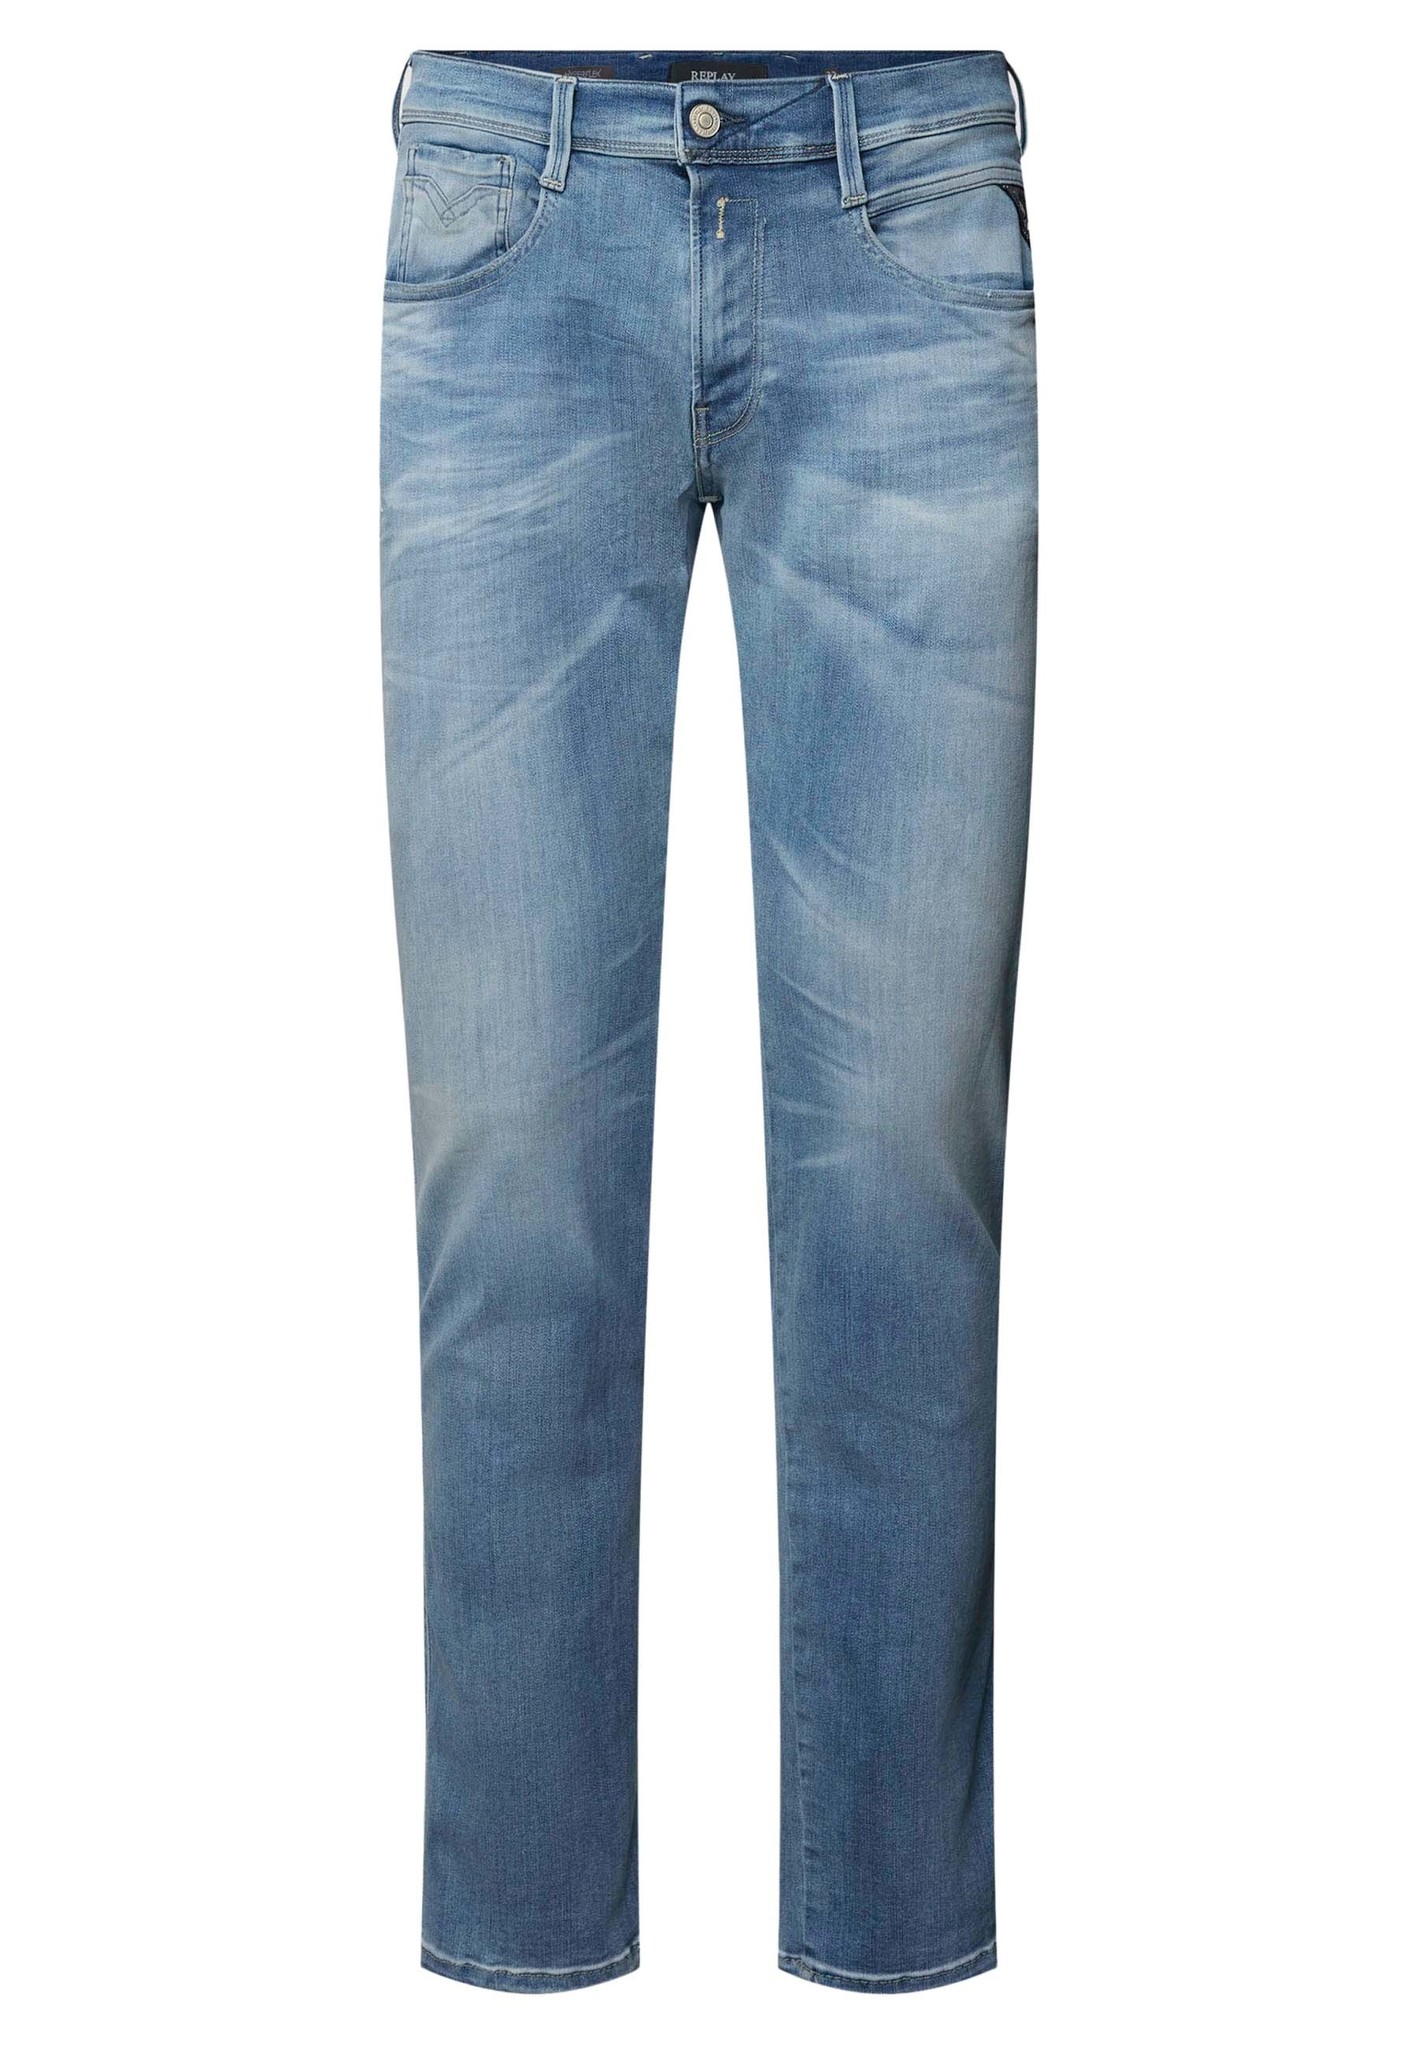 Replay Anbass jeans blauw Heren maat 36/32